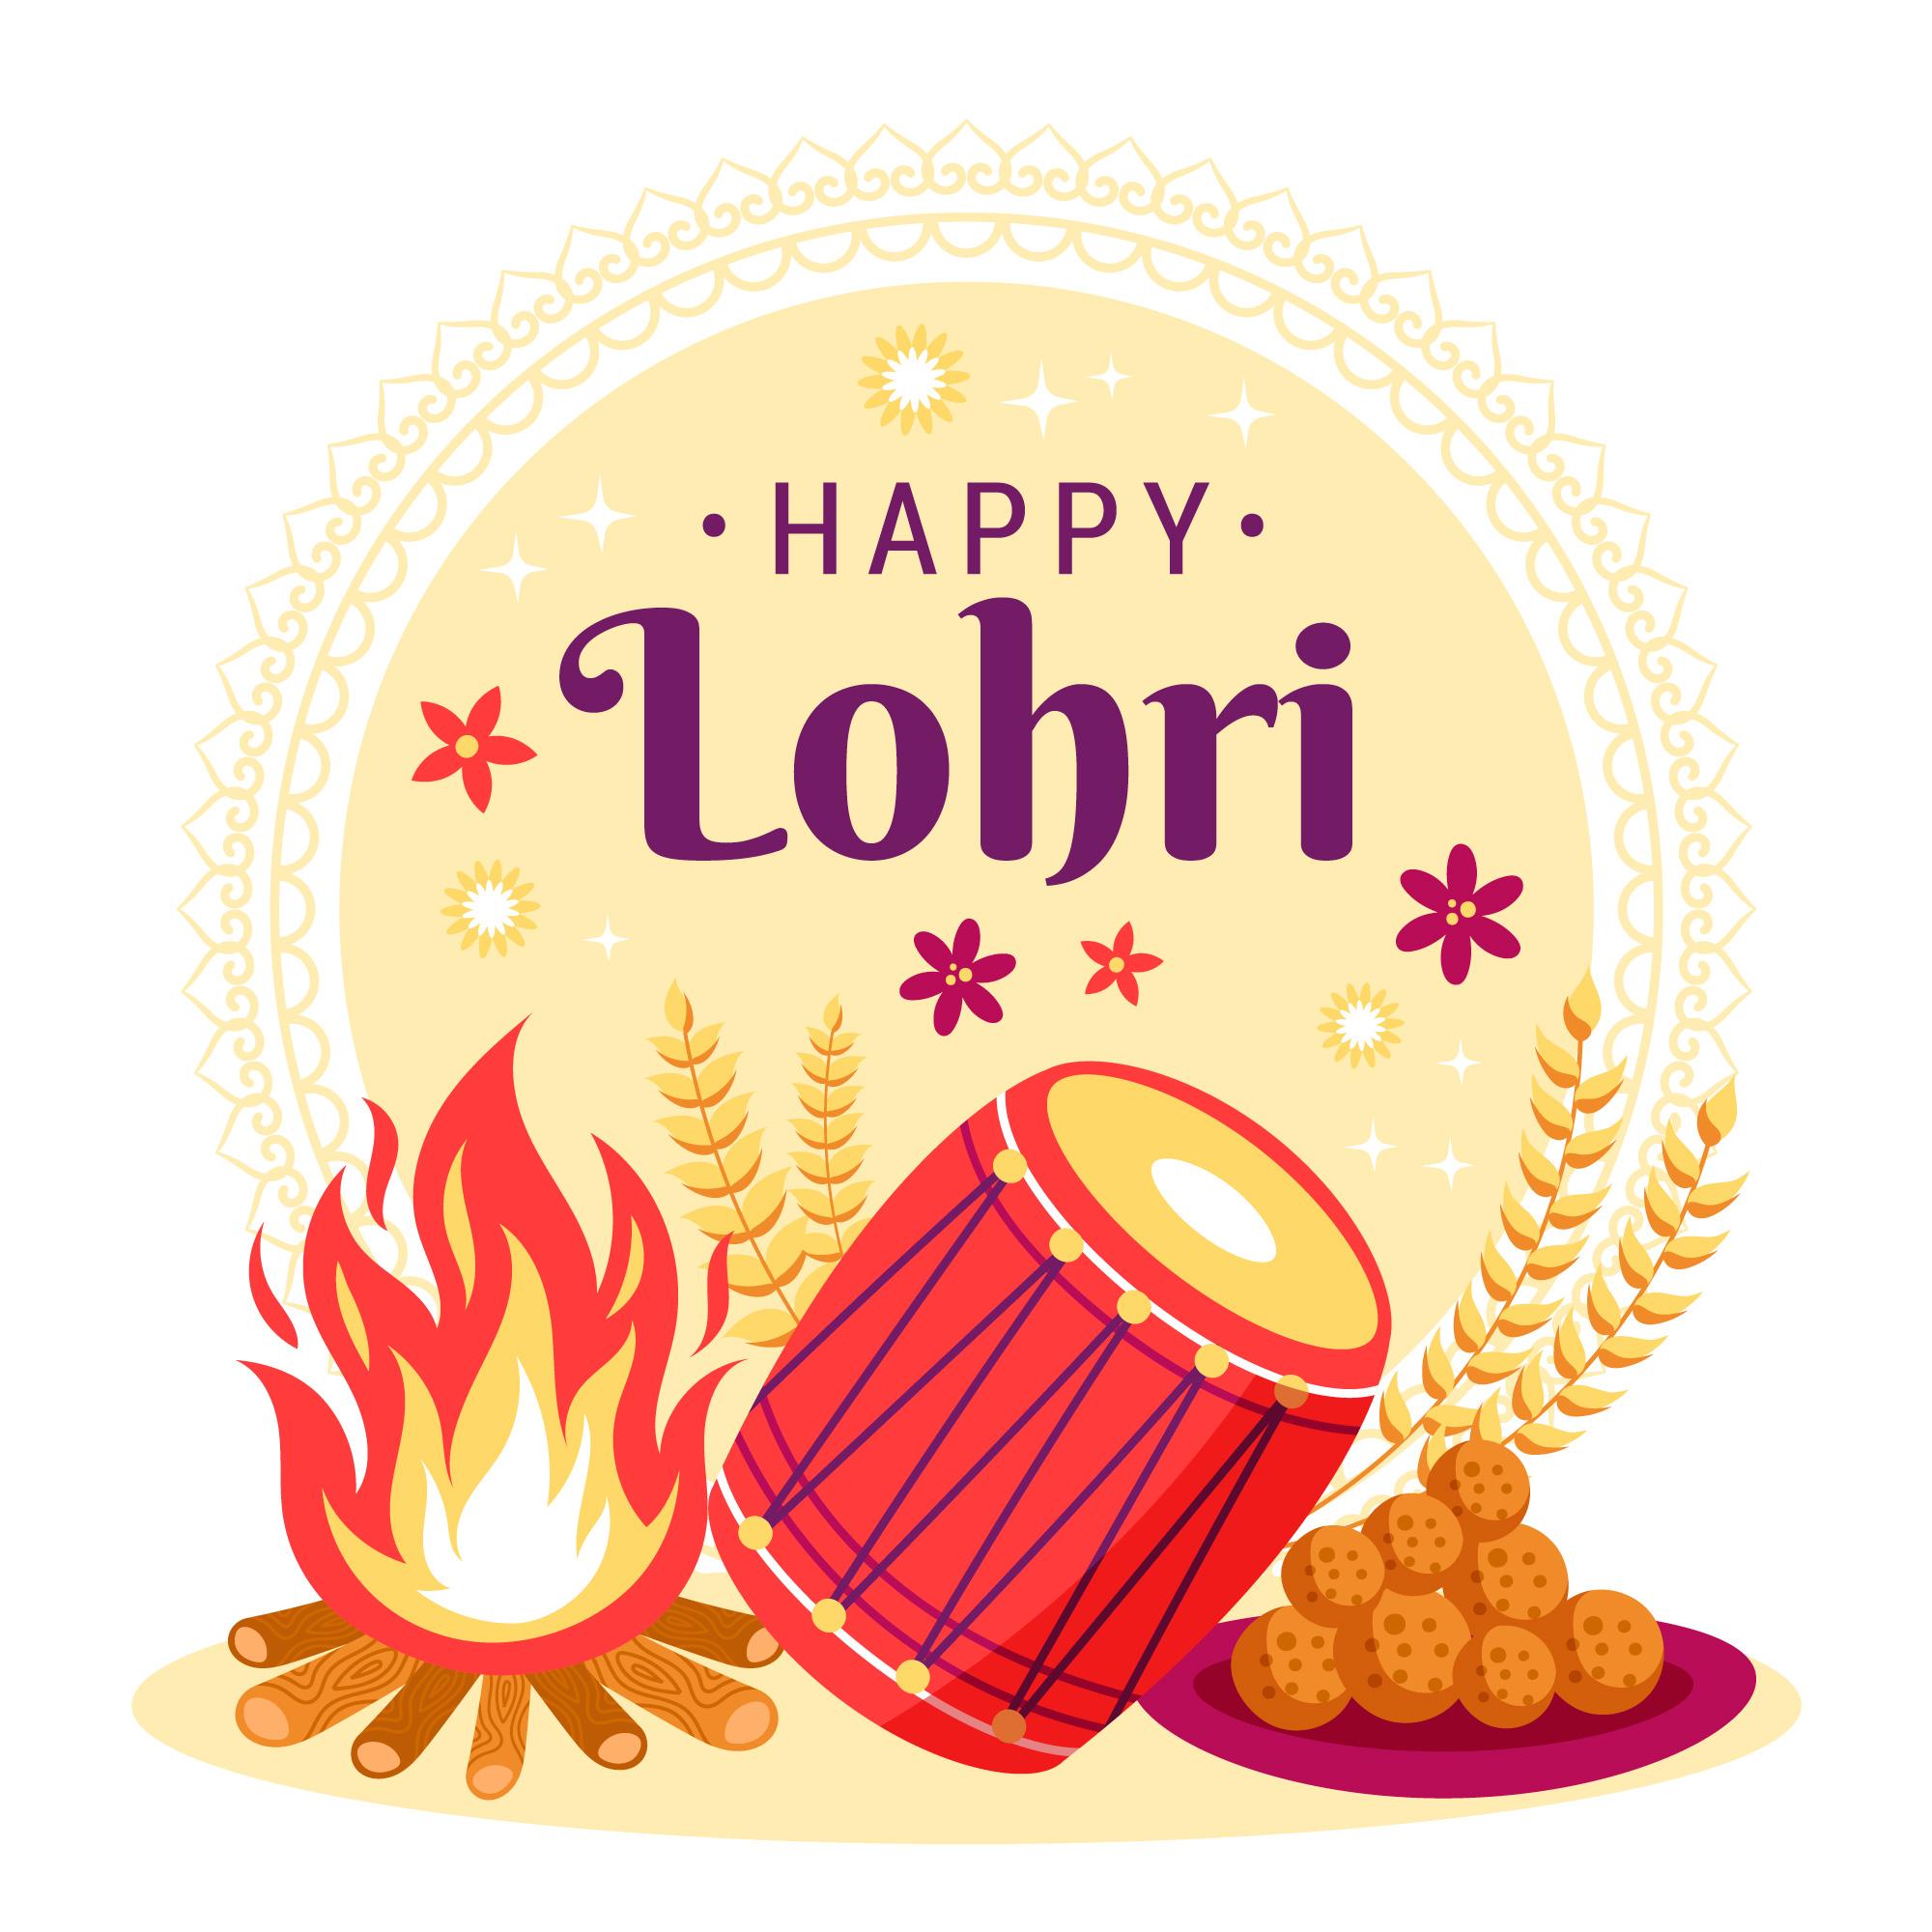 Lohri – The Bonfire Festival